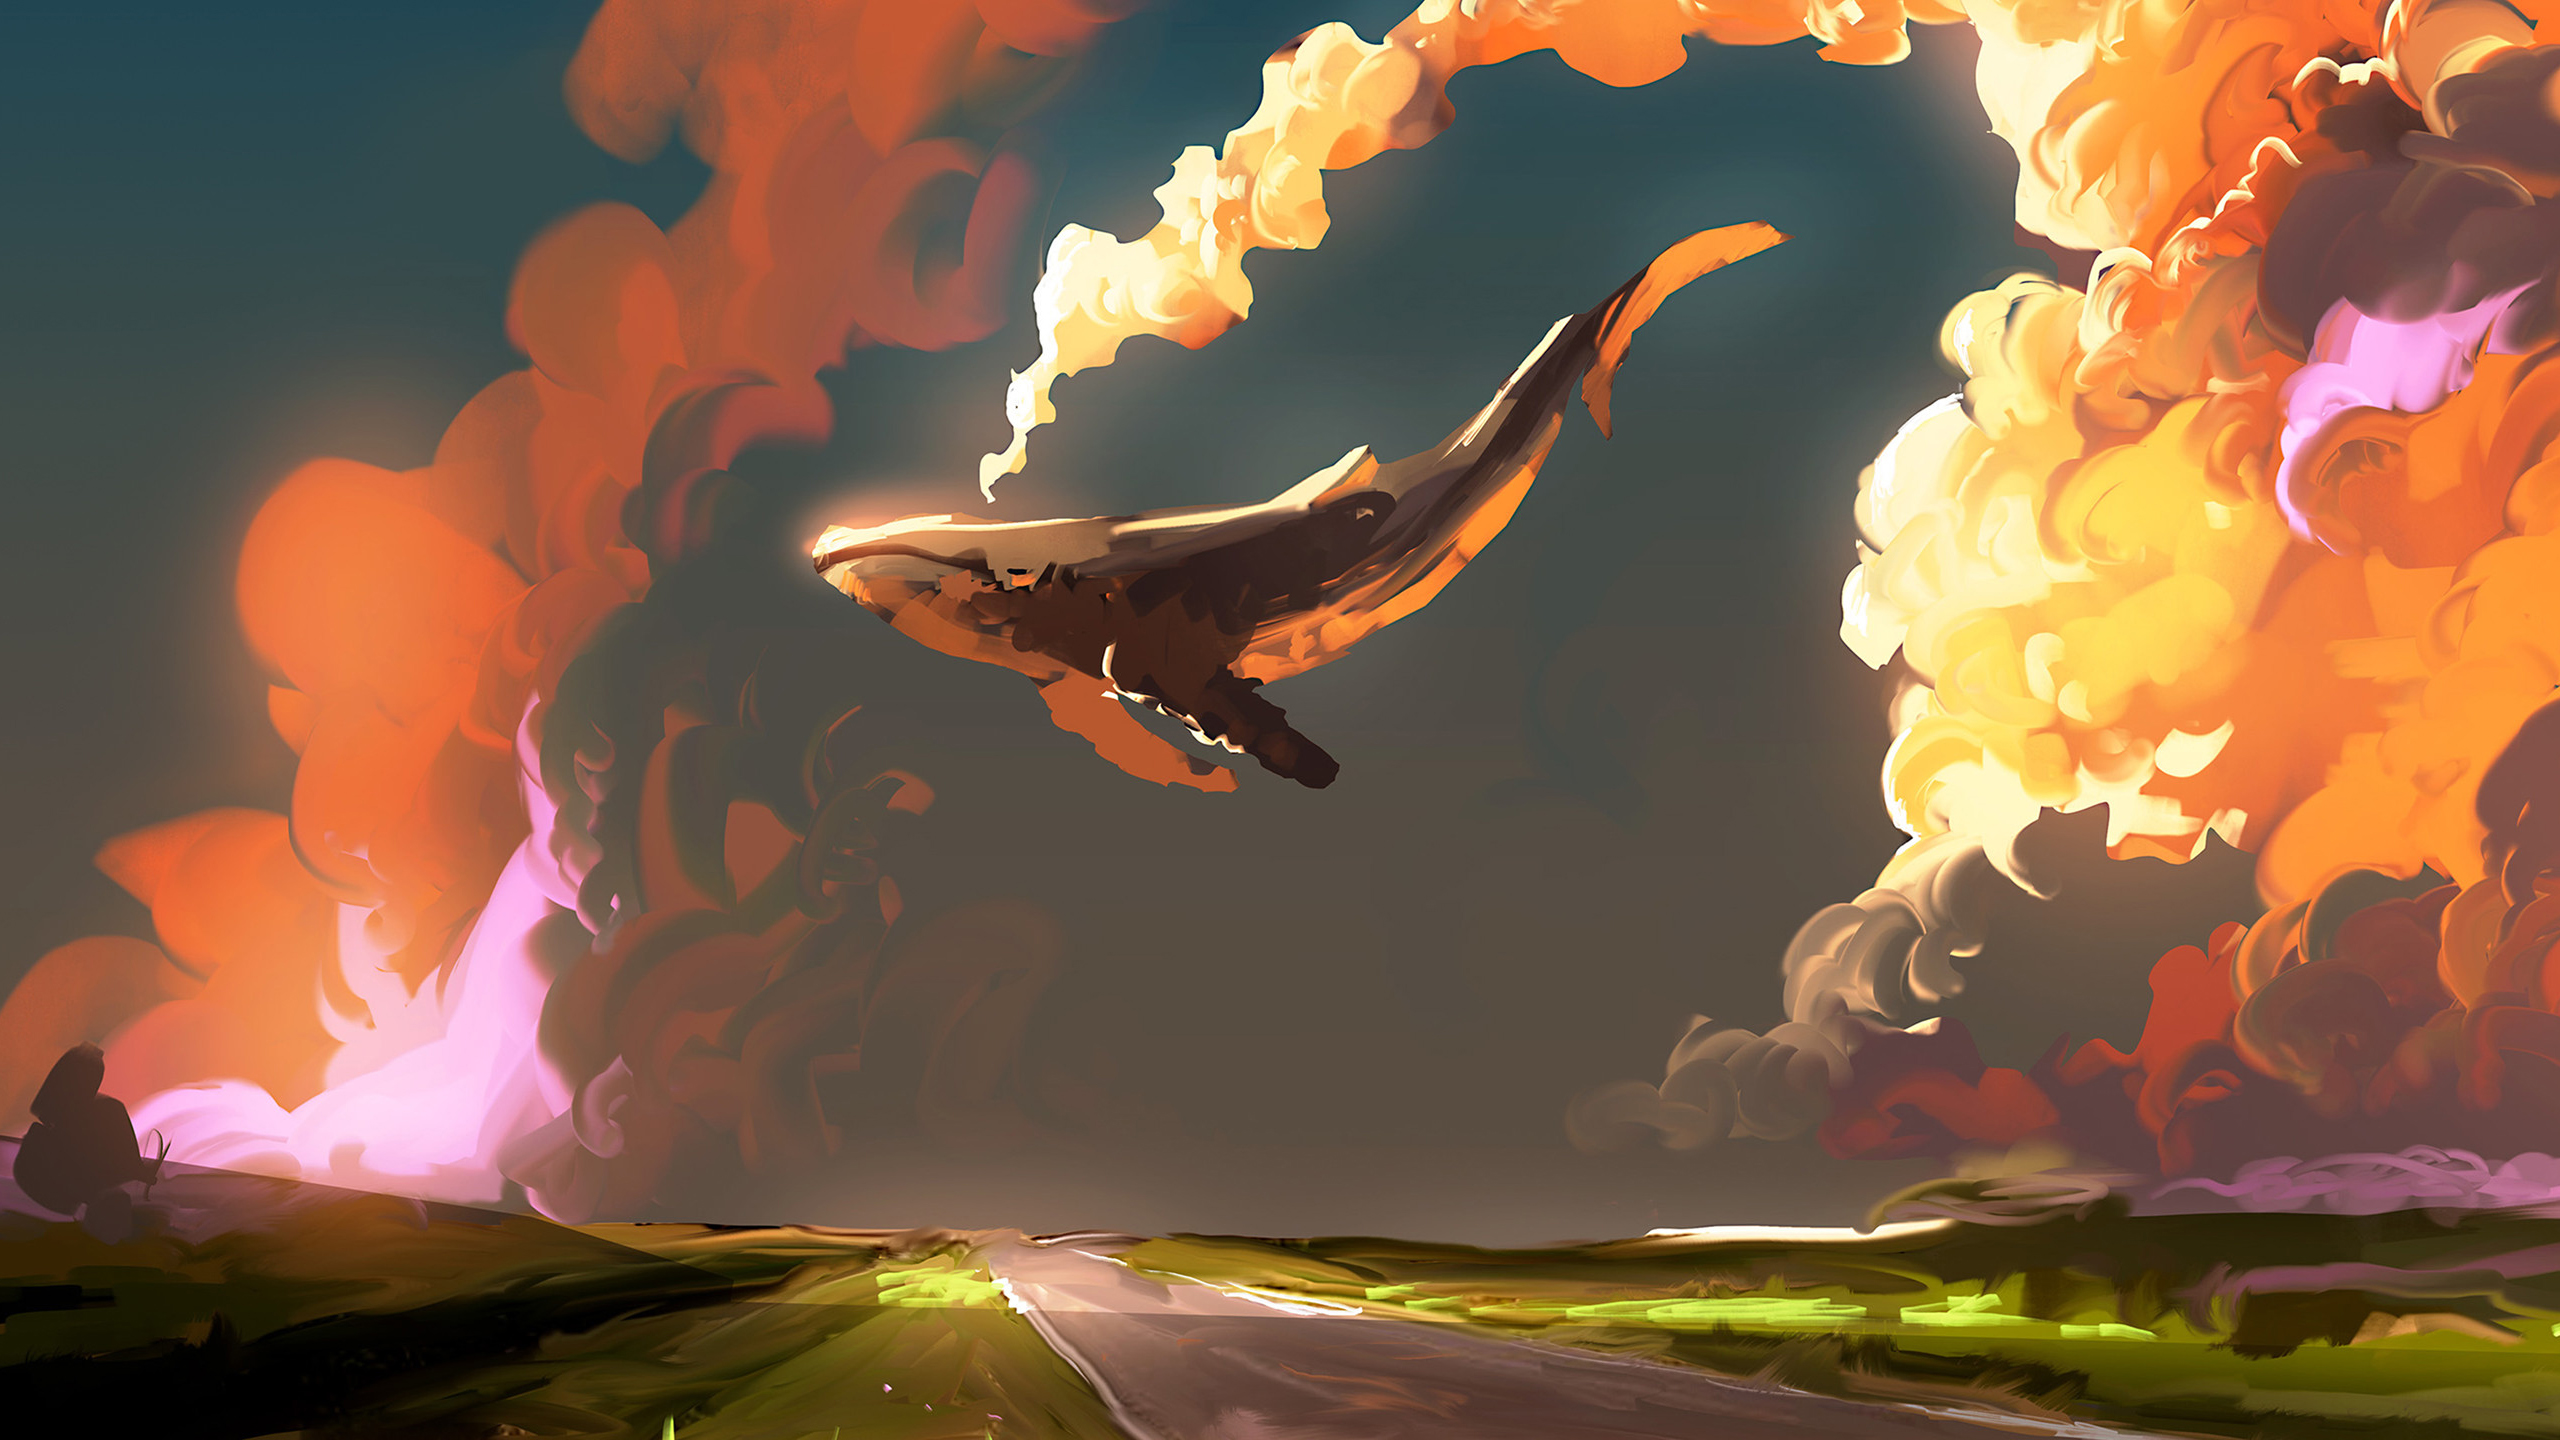 General 2560x1440 whale sky artwork fantasy art Dominik Mayer flying smoke road horizon